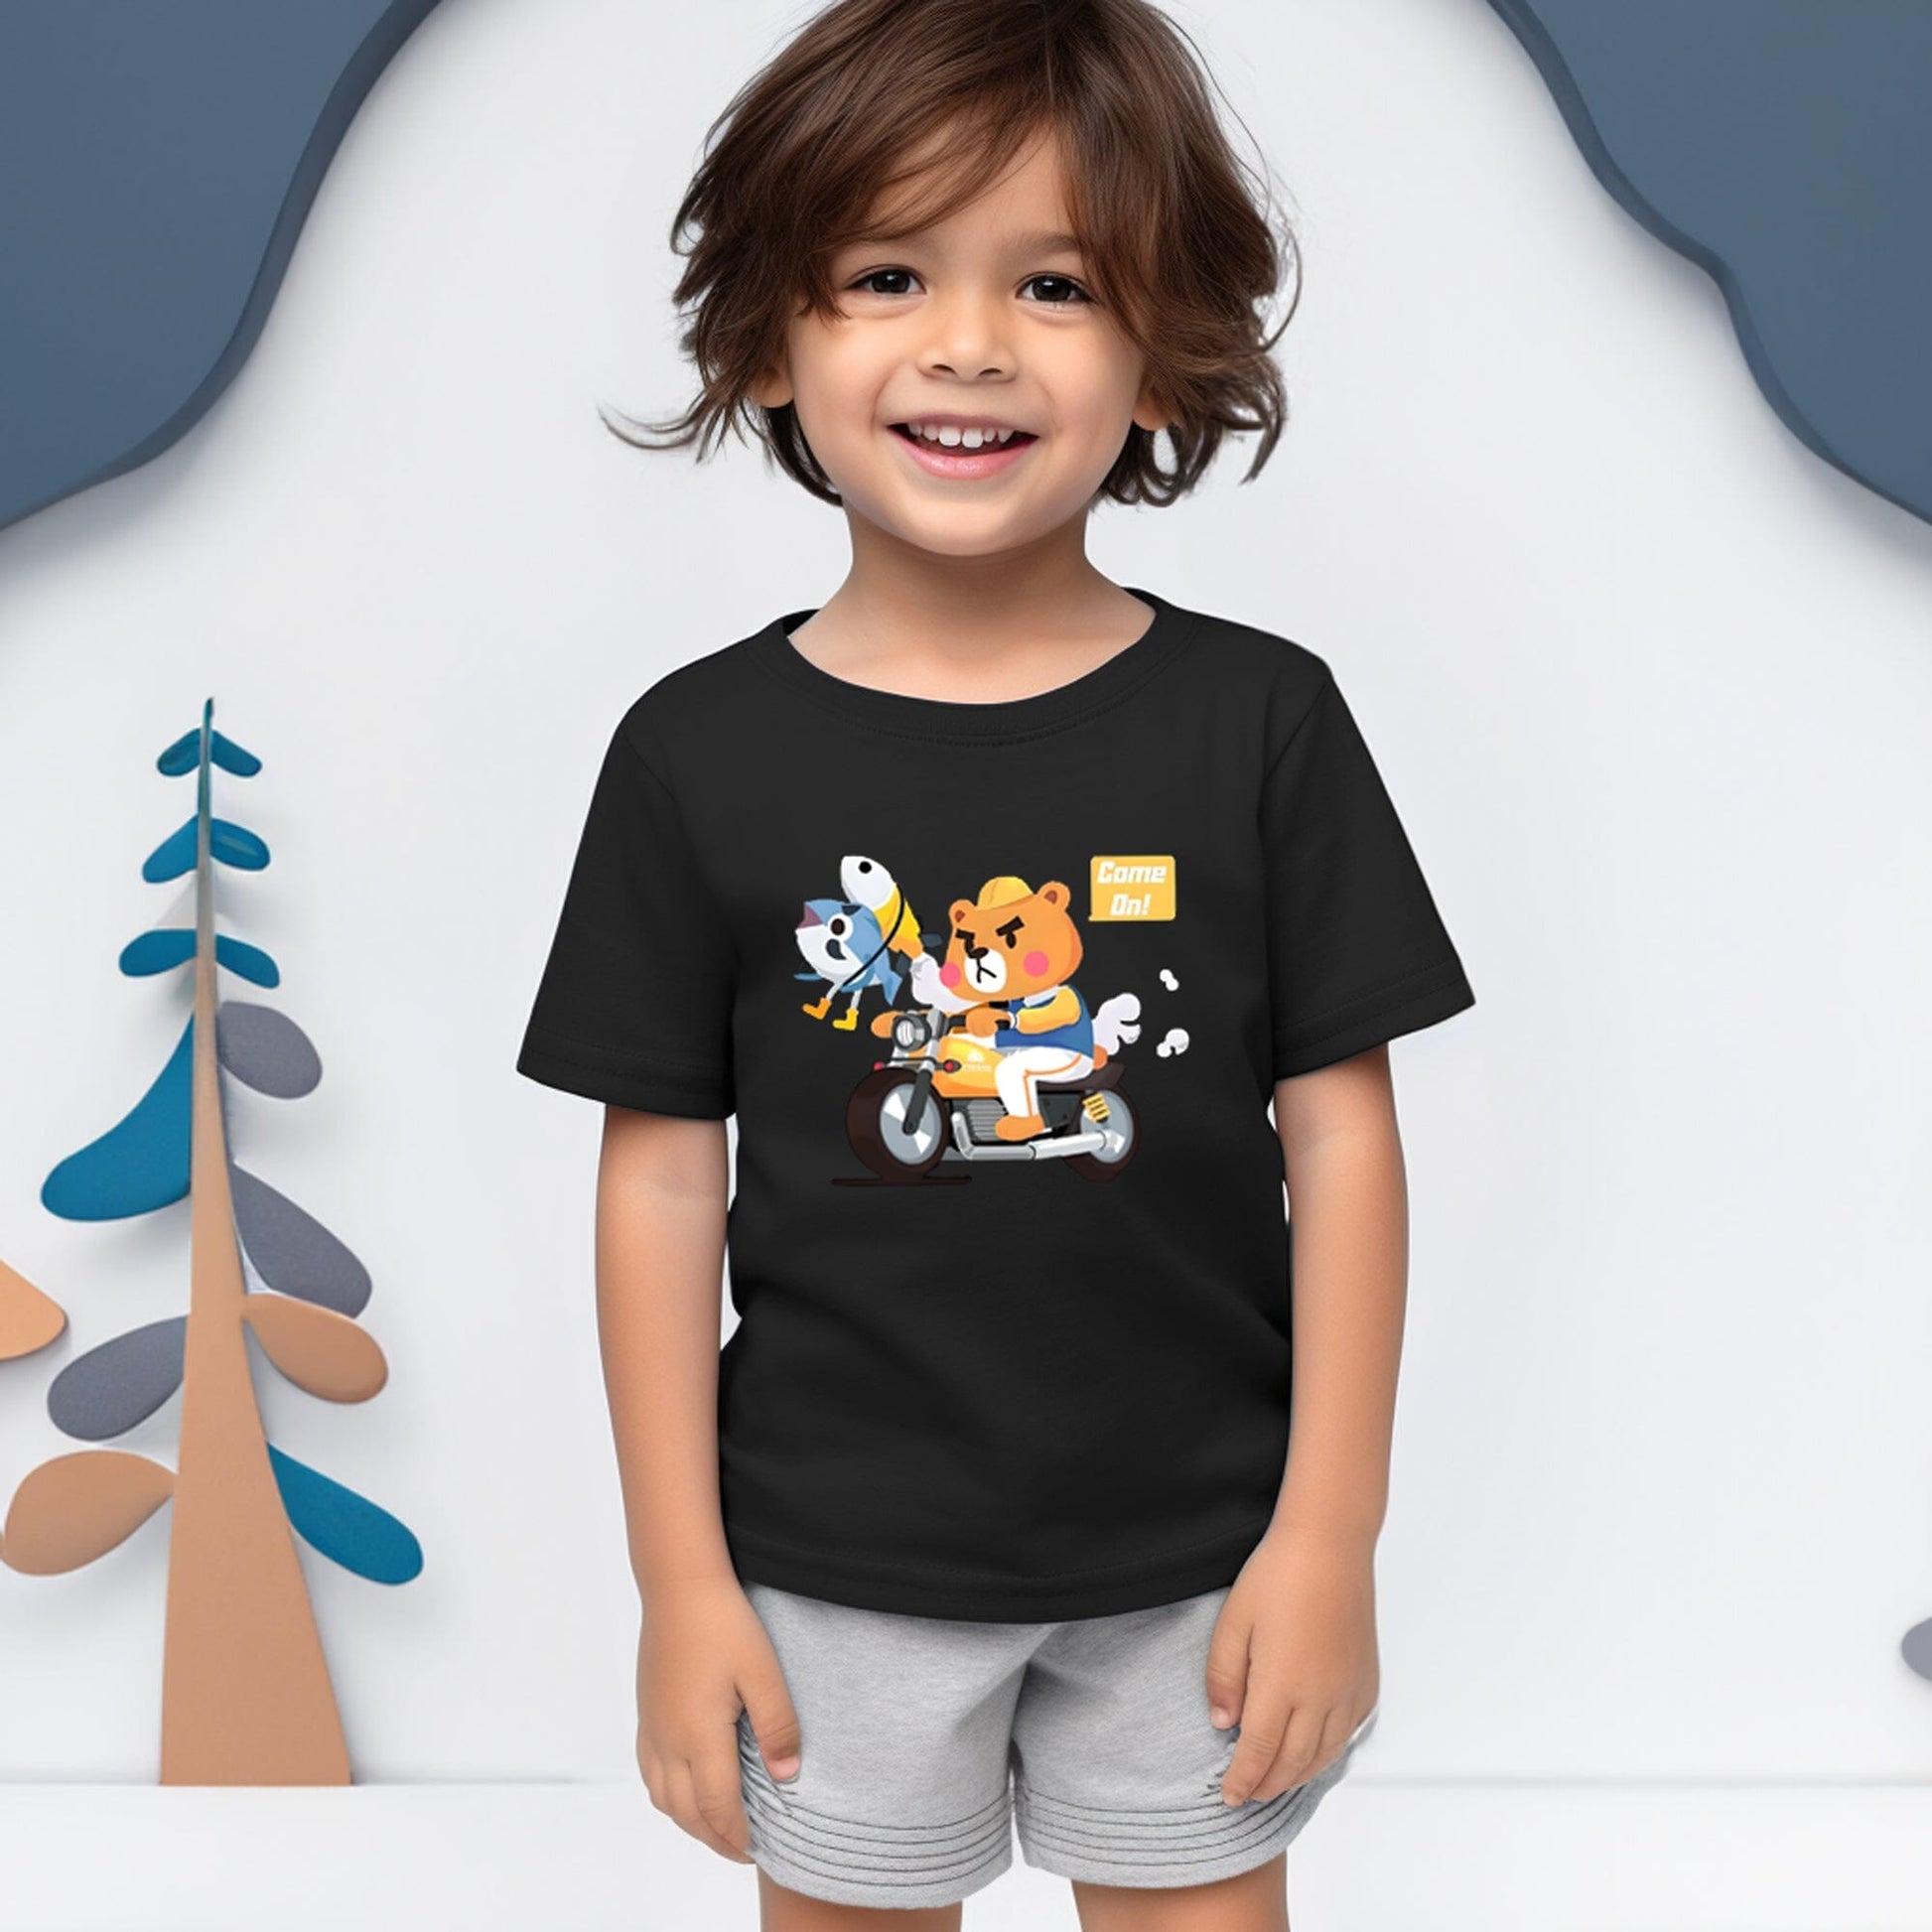 Polo Republica Boy's Bear & Fish Printed Tee Shirt Boy's Tee Shirt Polo Republica Black 1-2 Years 